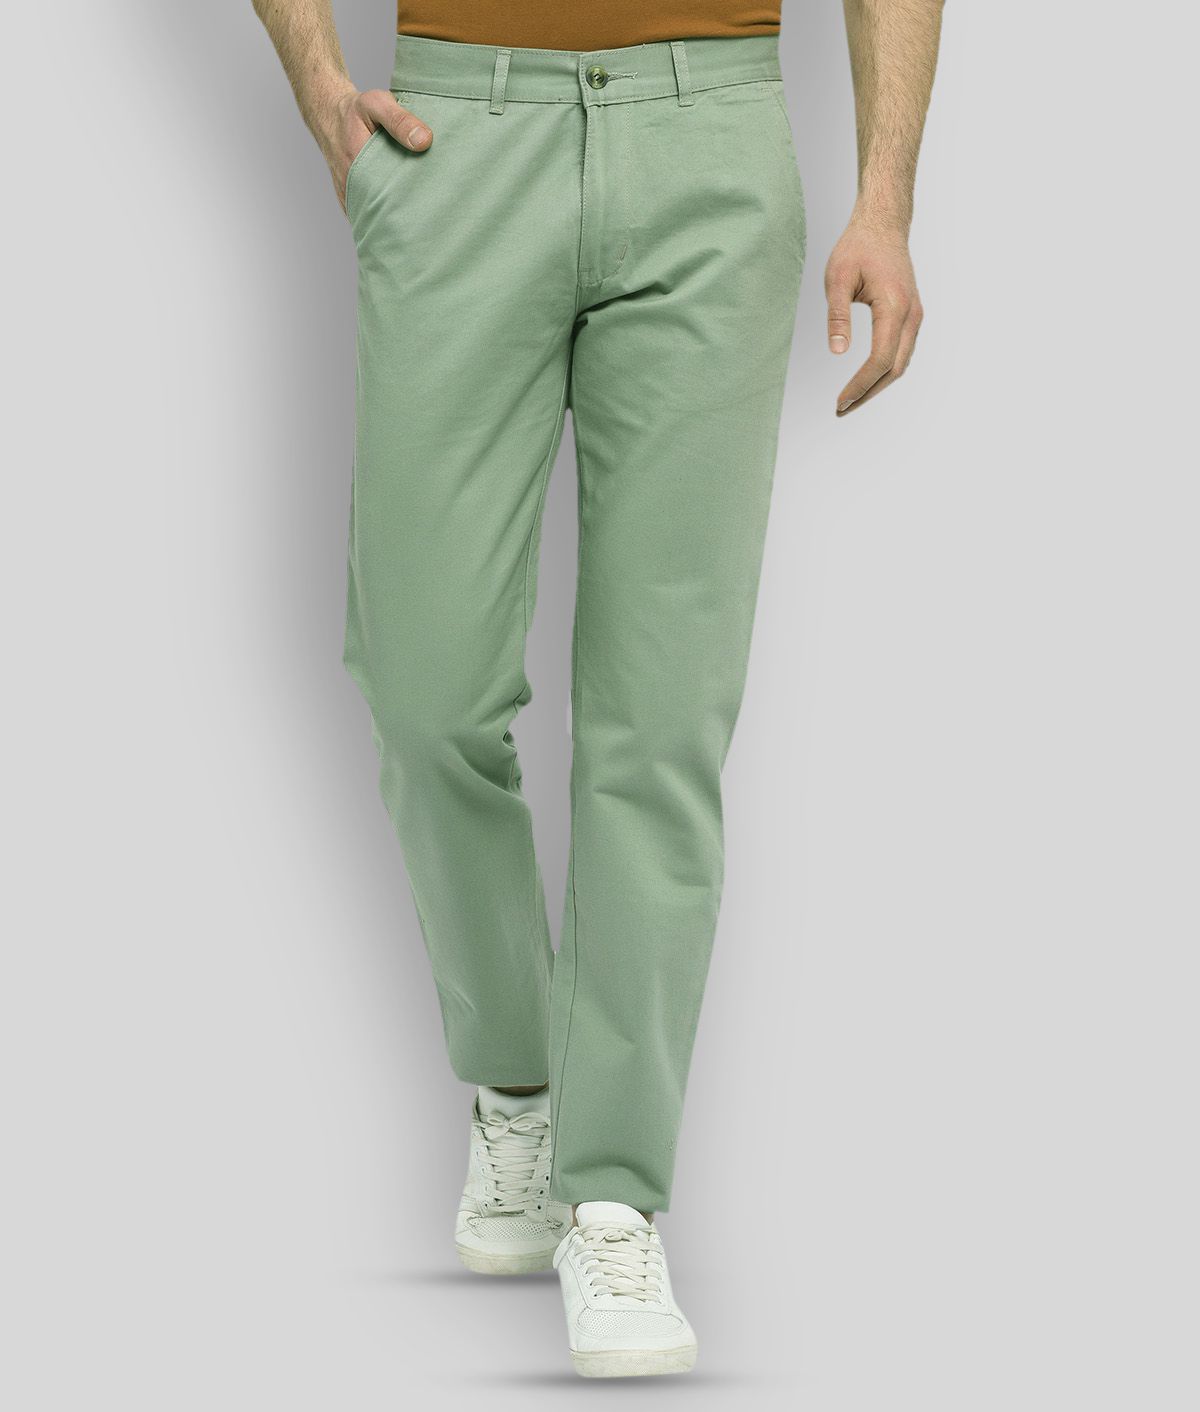     			Studio Nexx - Light Green Cotton Regular Fit  Chinos (Pack of 1)